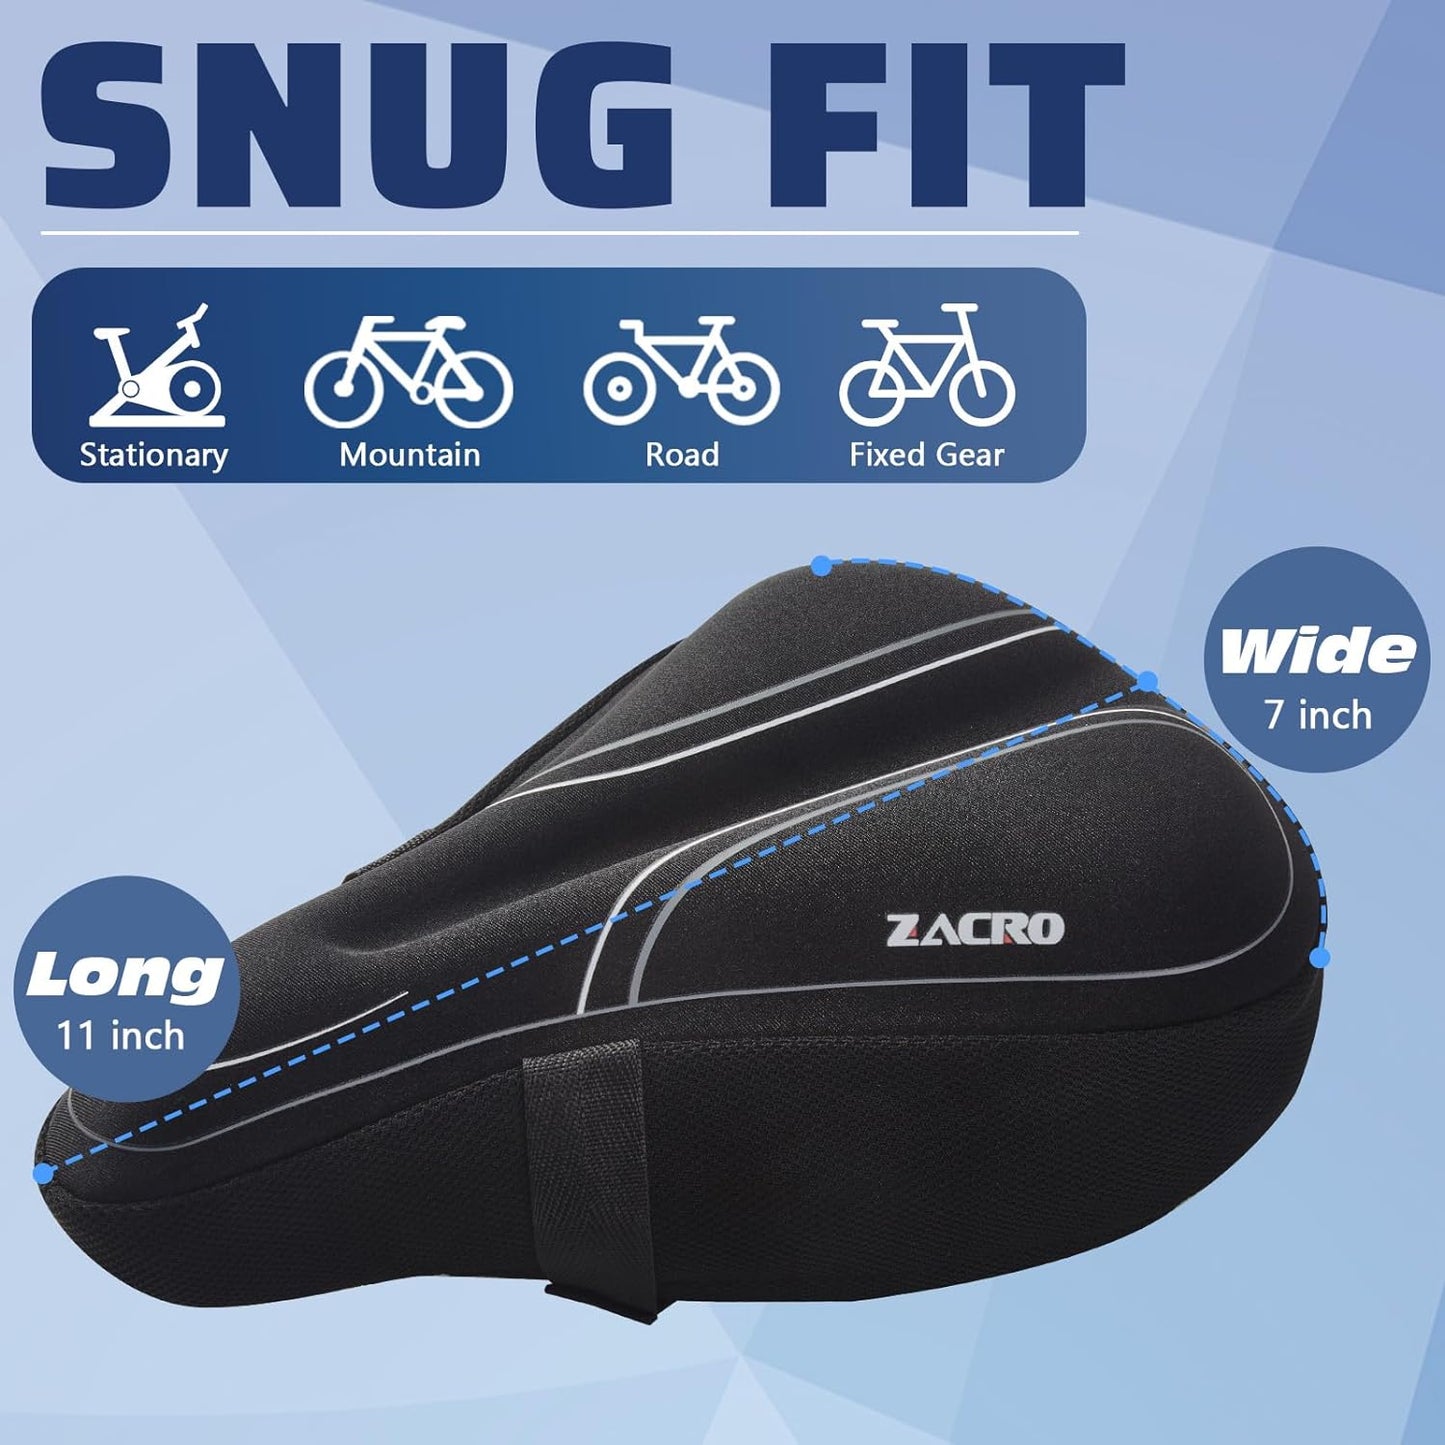 Zacro Big Size Exercise Bike Seat, Soft Wide Gel Bicycle Cushion for Bike Saddle